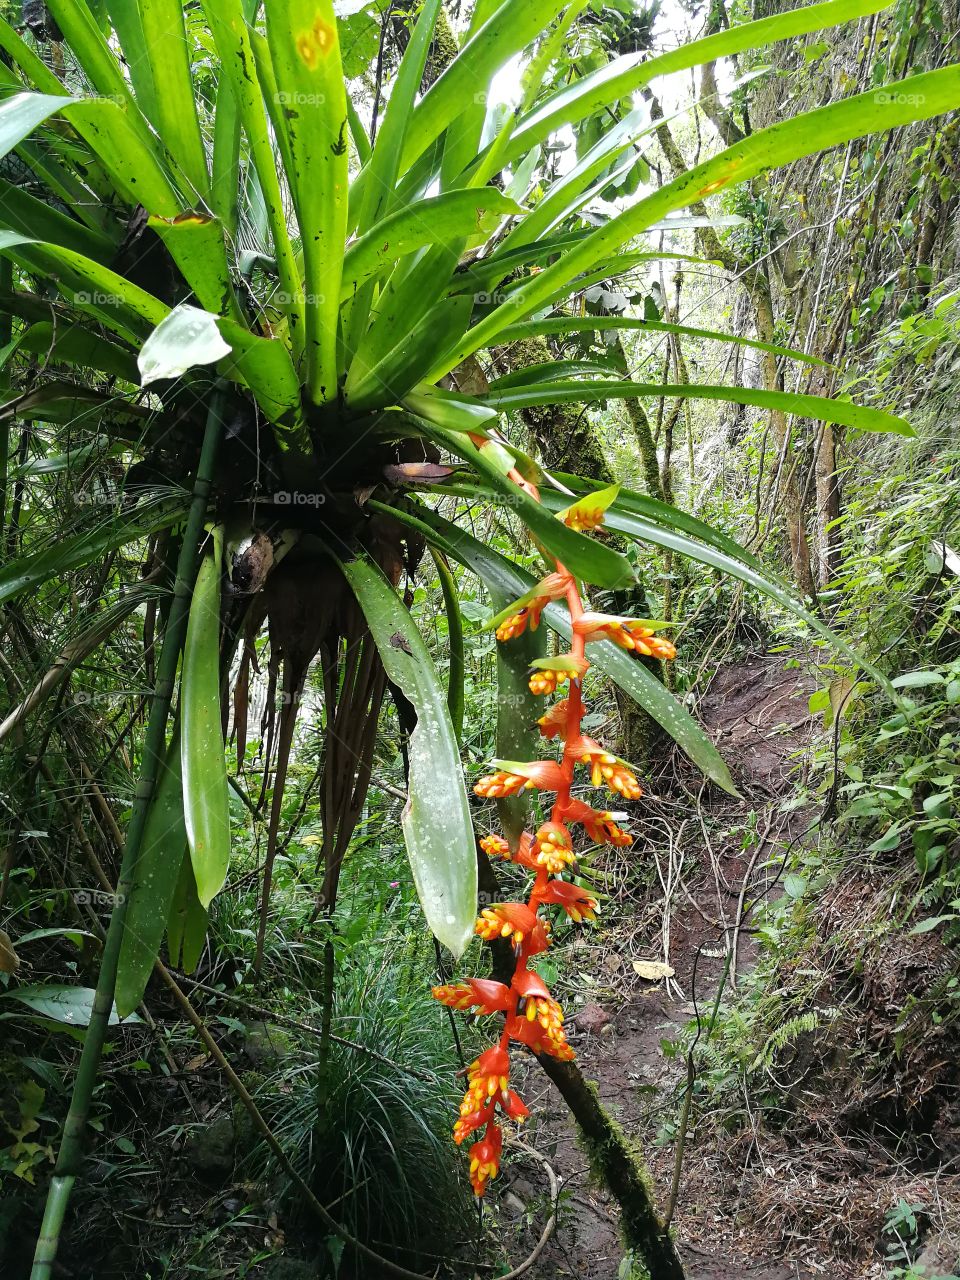 Jungle in Colombia